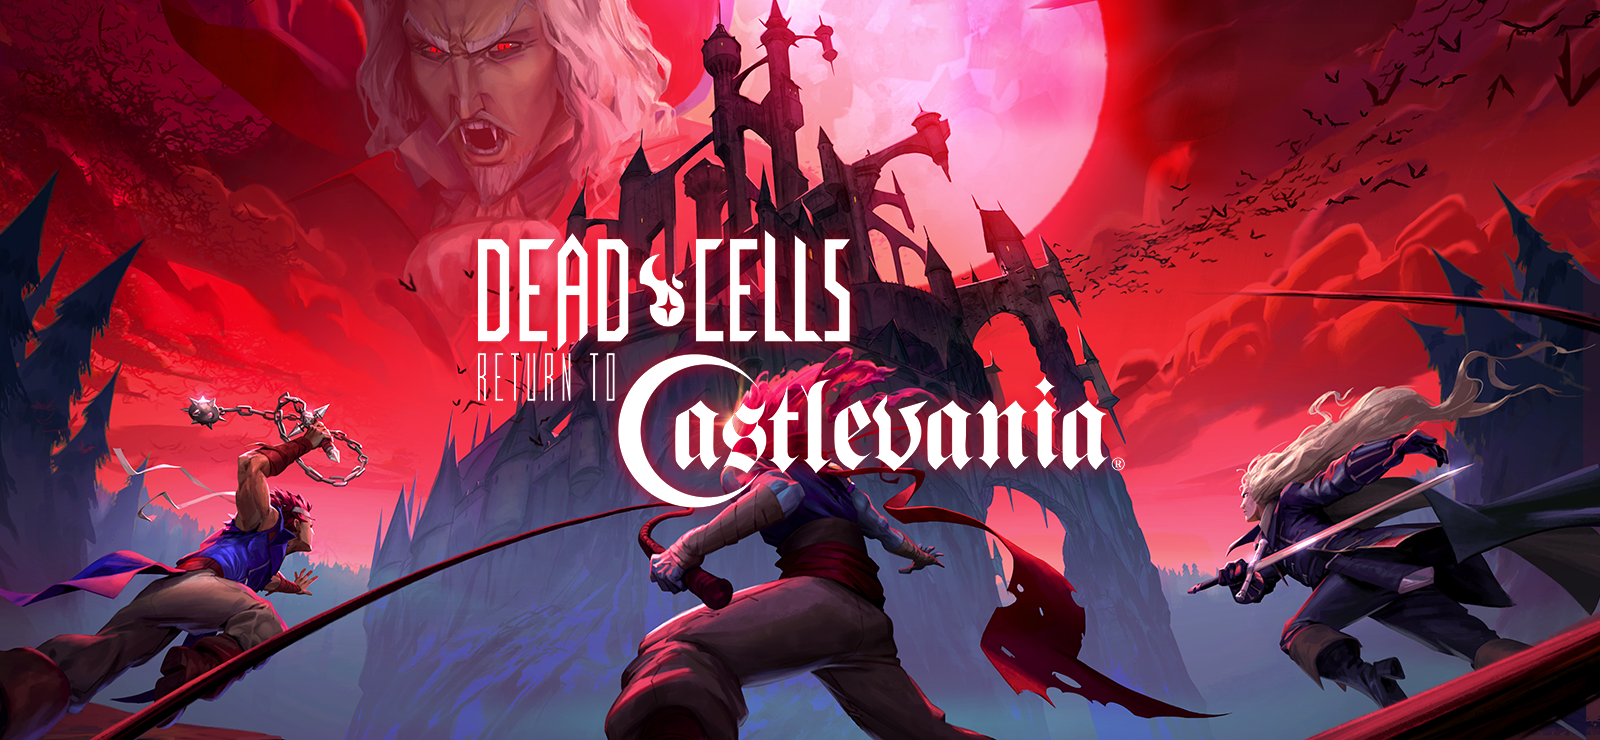 Dead Cells: Return To Castlevania